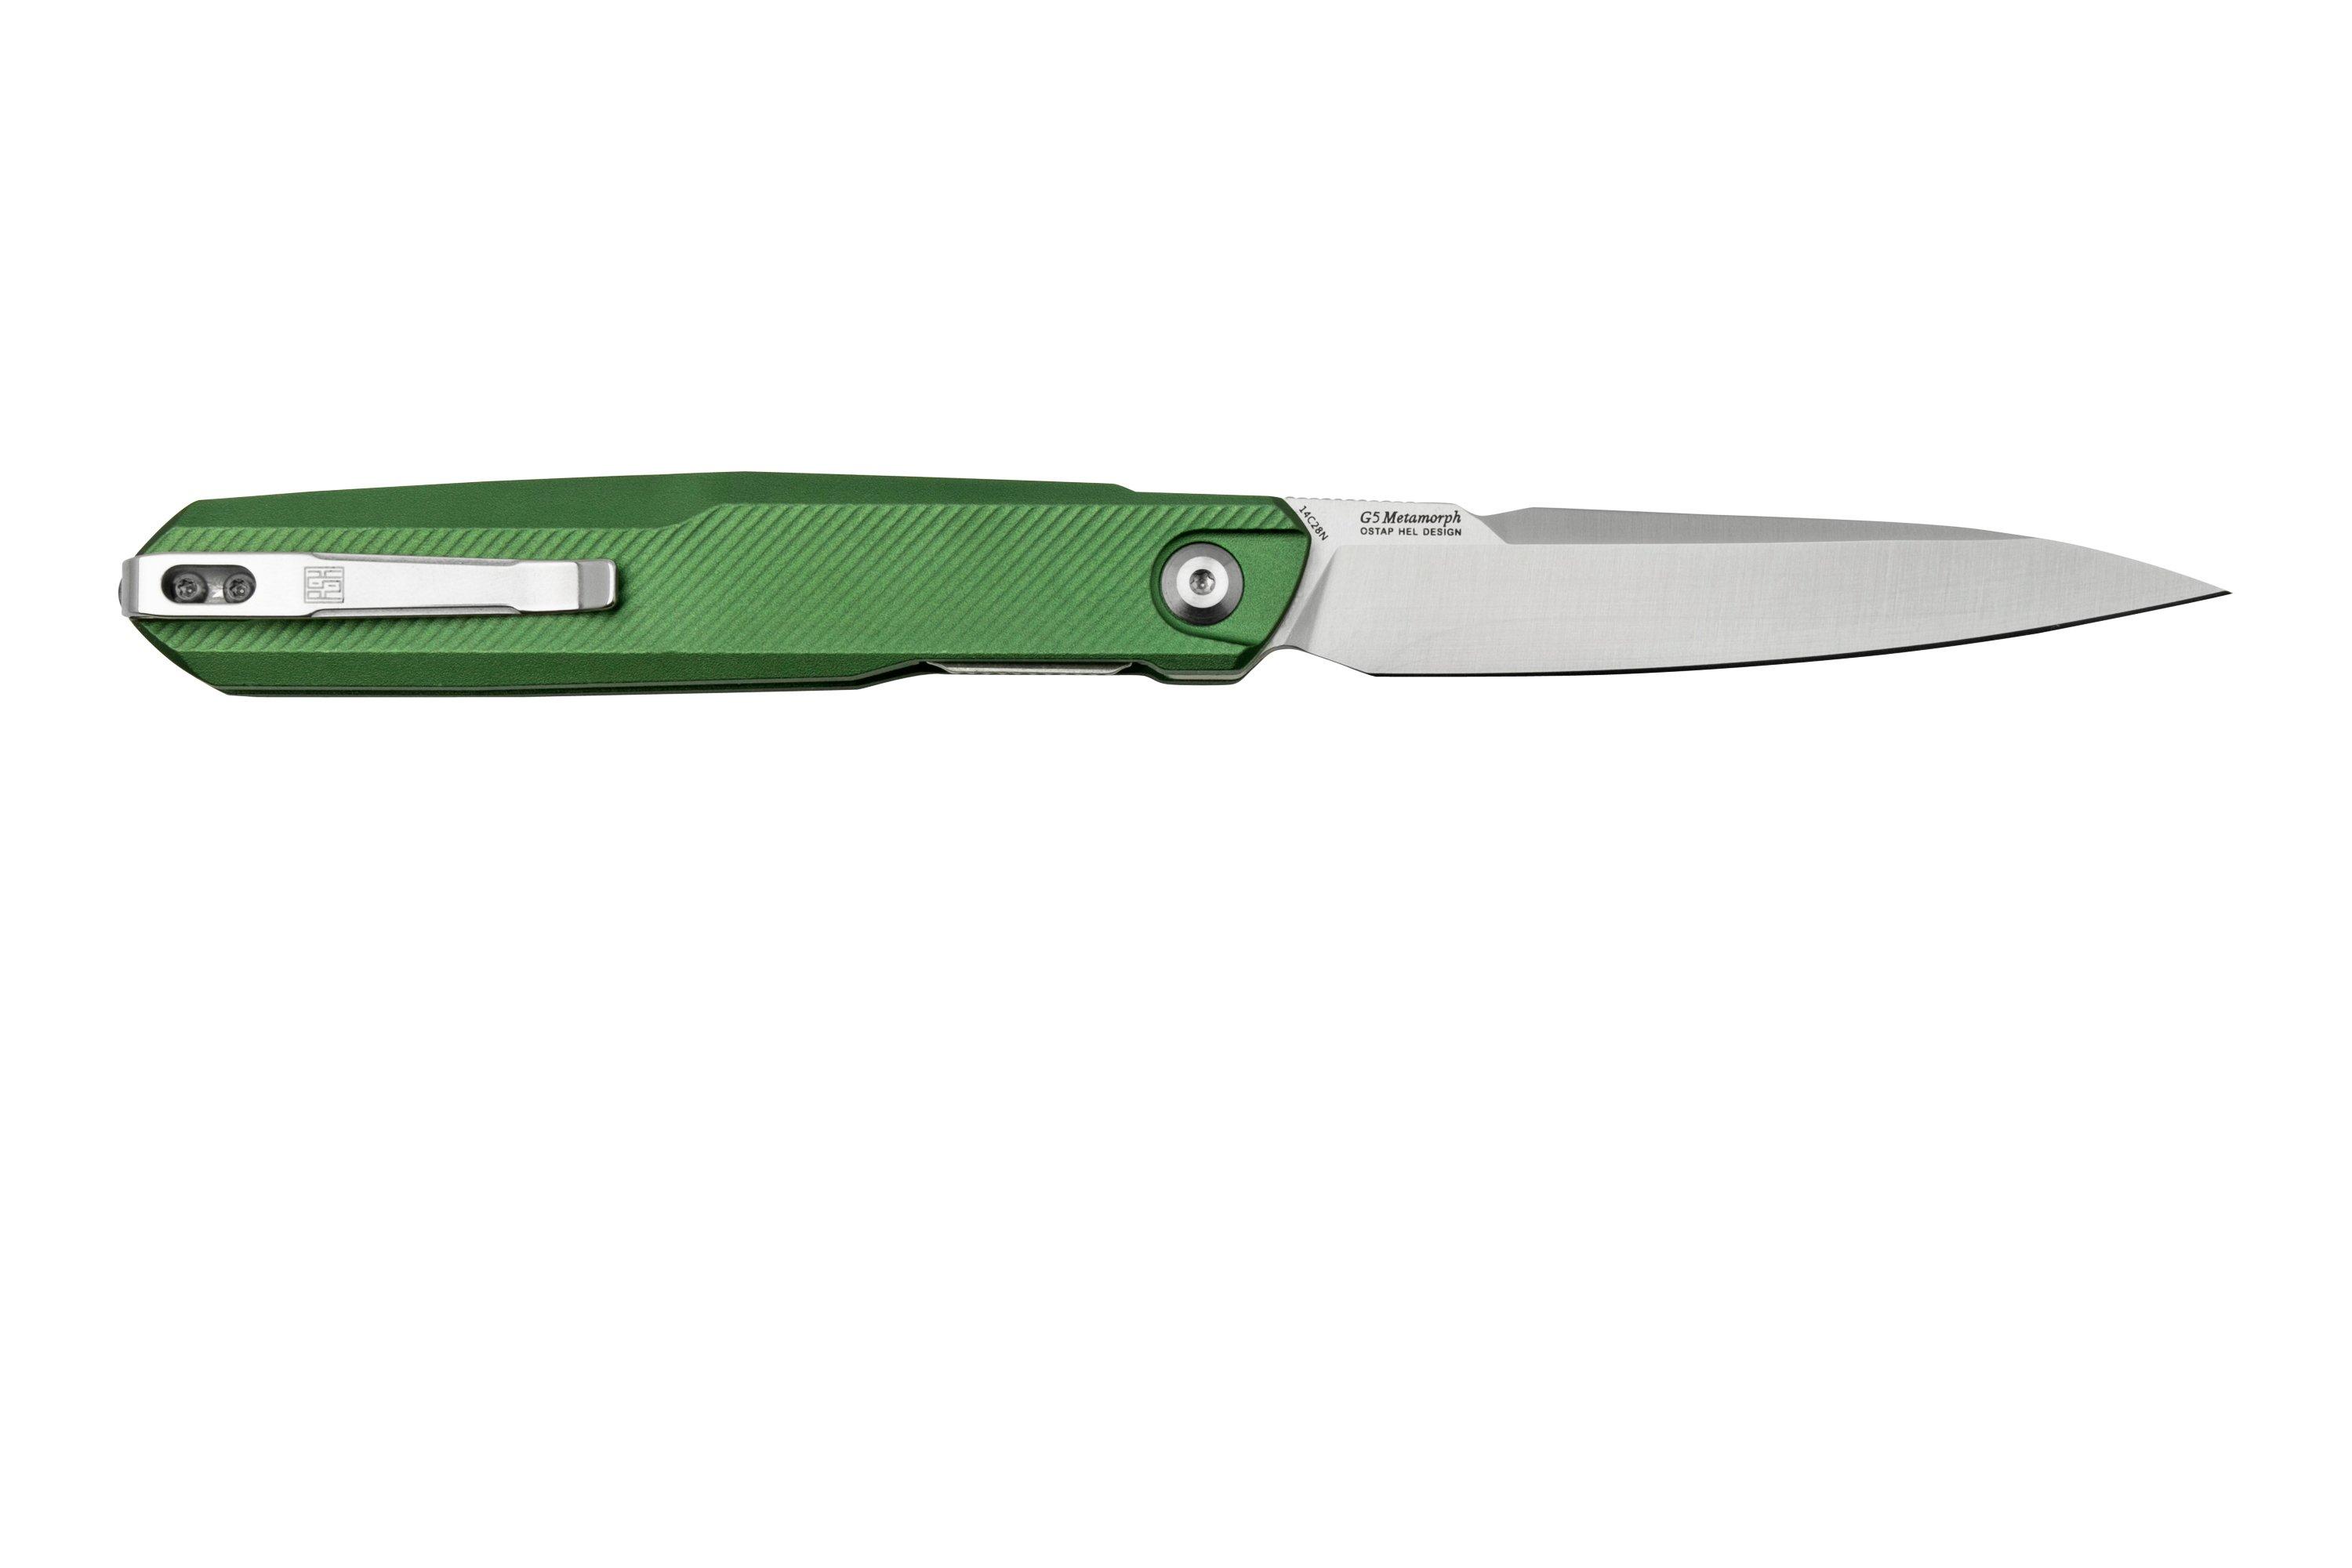  Real Steel G5 Metamorph Mk.II Folding Pocket Knife